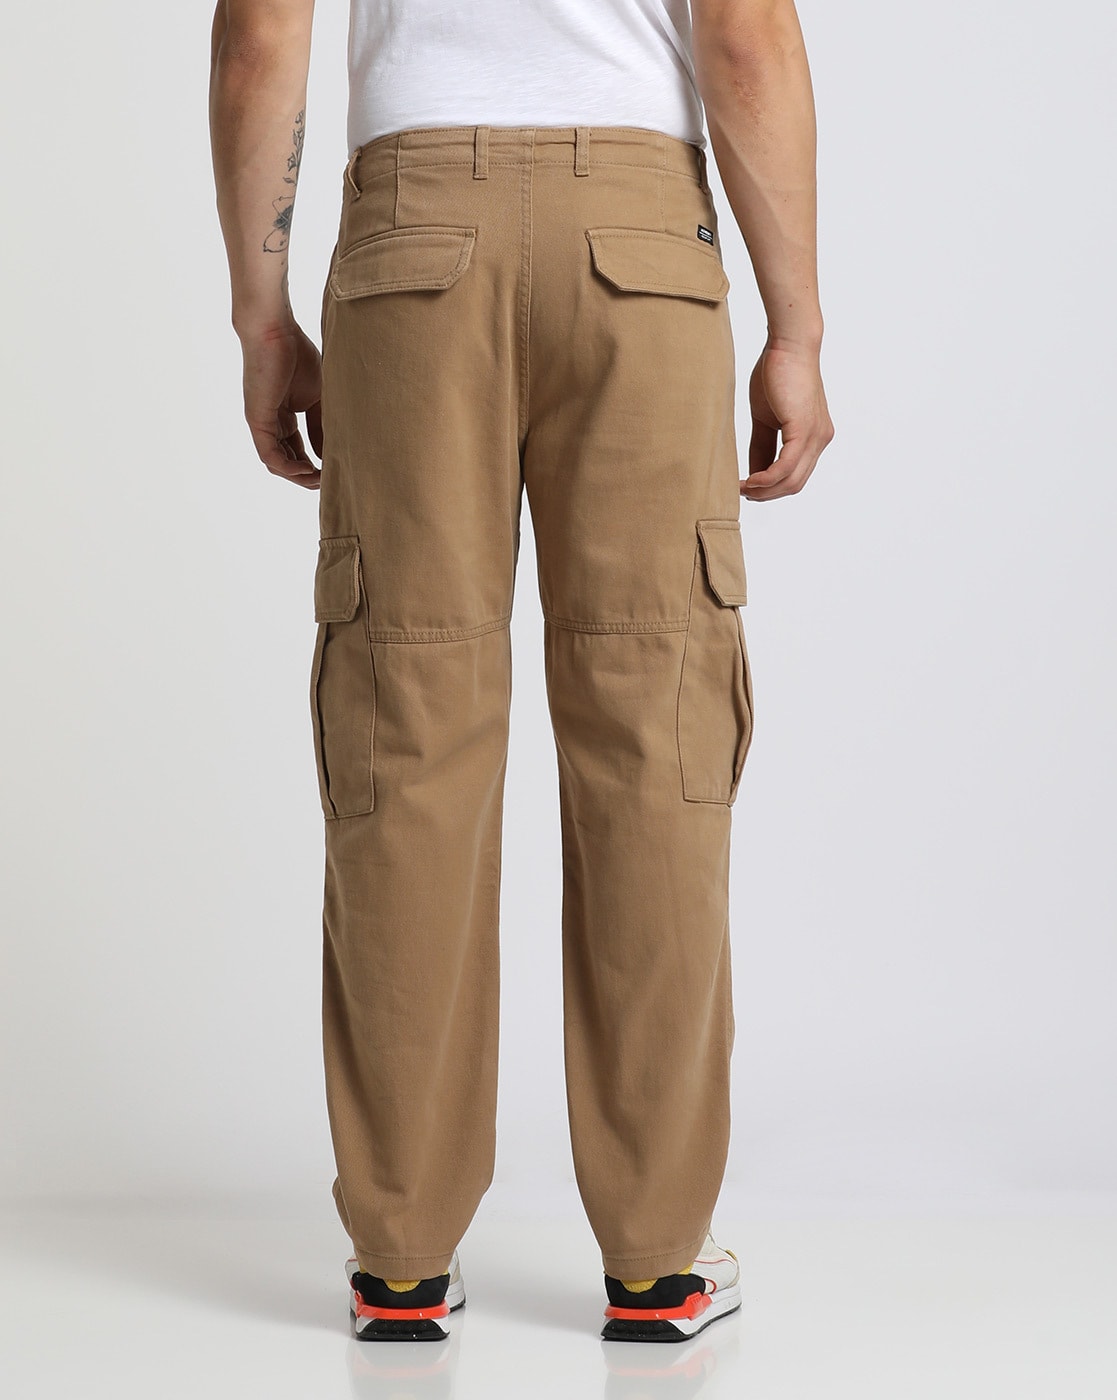 Mens Cargo Pants Many Pockets Men Trousers Casual Outdoors Military Pants  Men Plus Size Pantalon Tactico Hombre  Wish